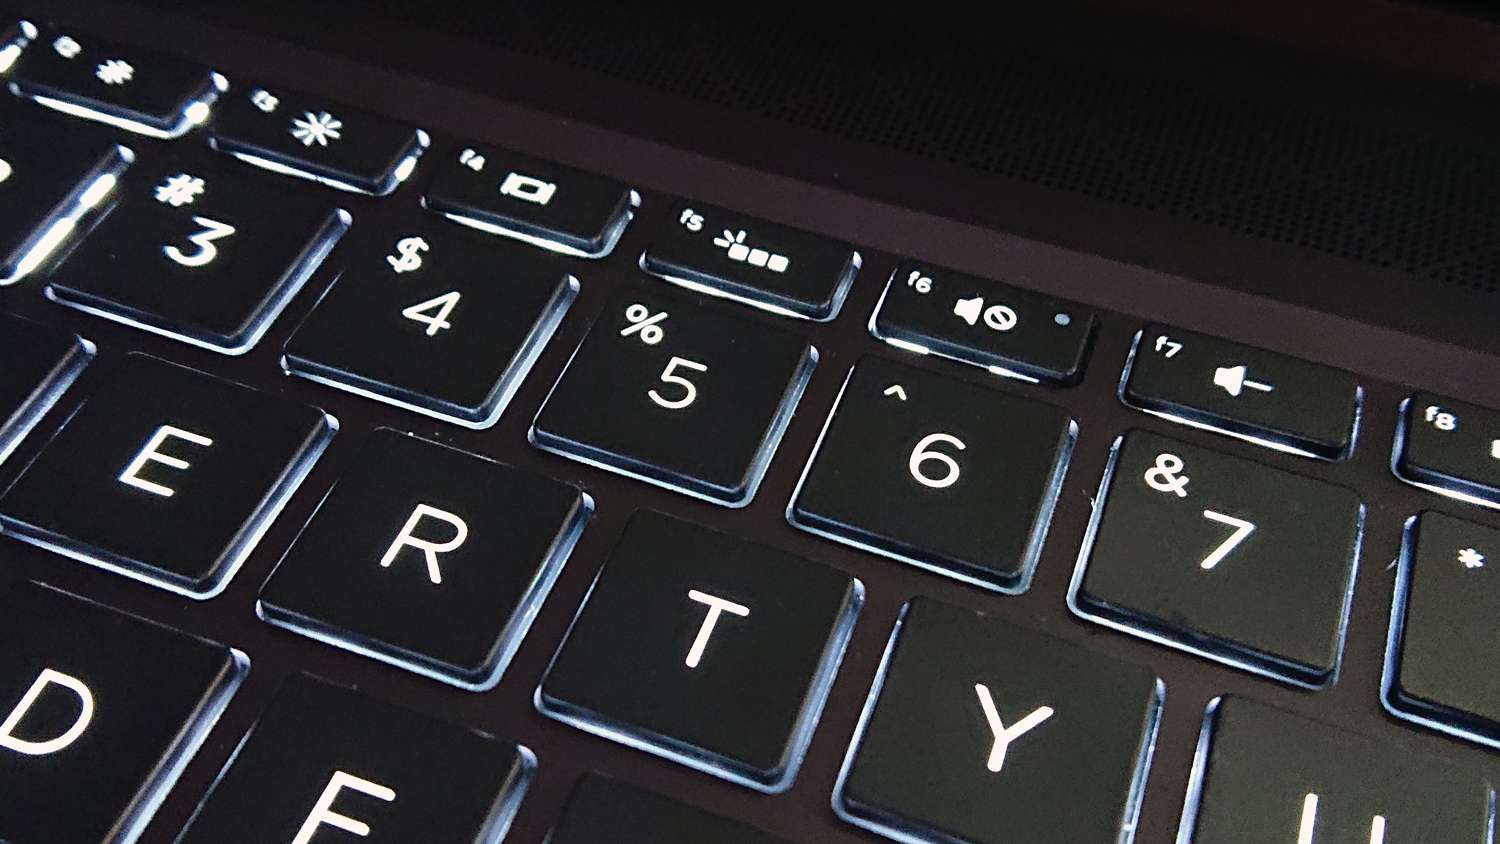 how-do-i-turn-off-the-light-on-my-keyboard-hp-ultrabook